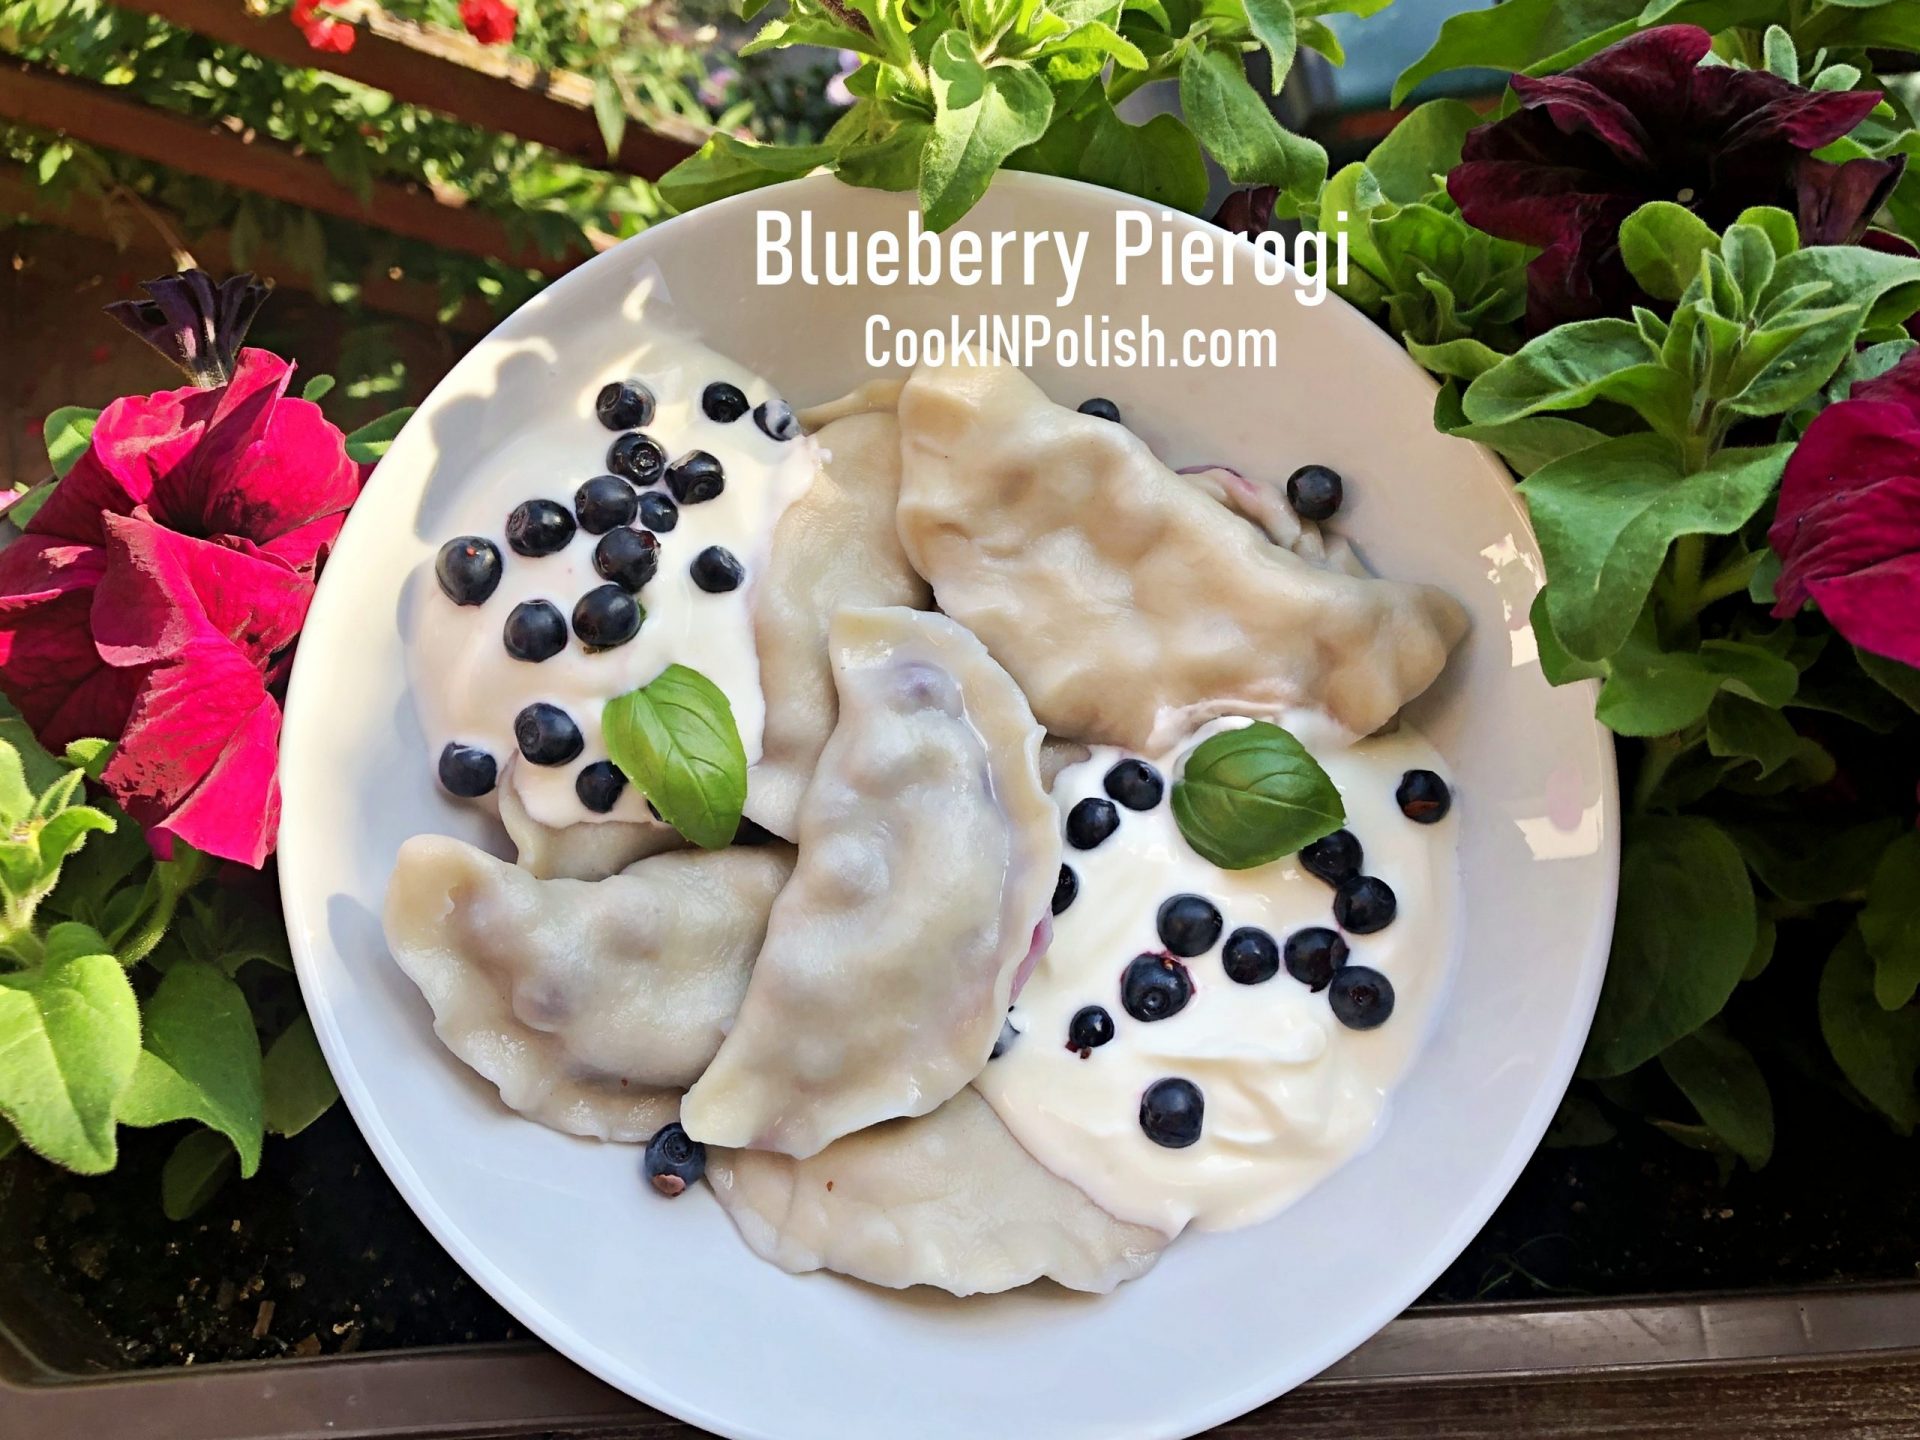 Blueberry Pierogi